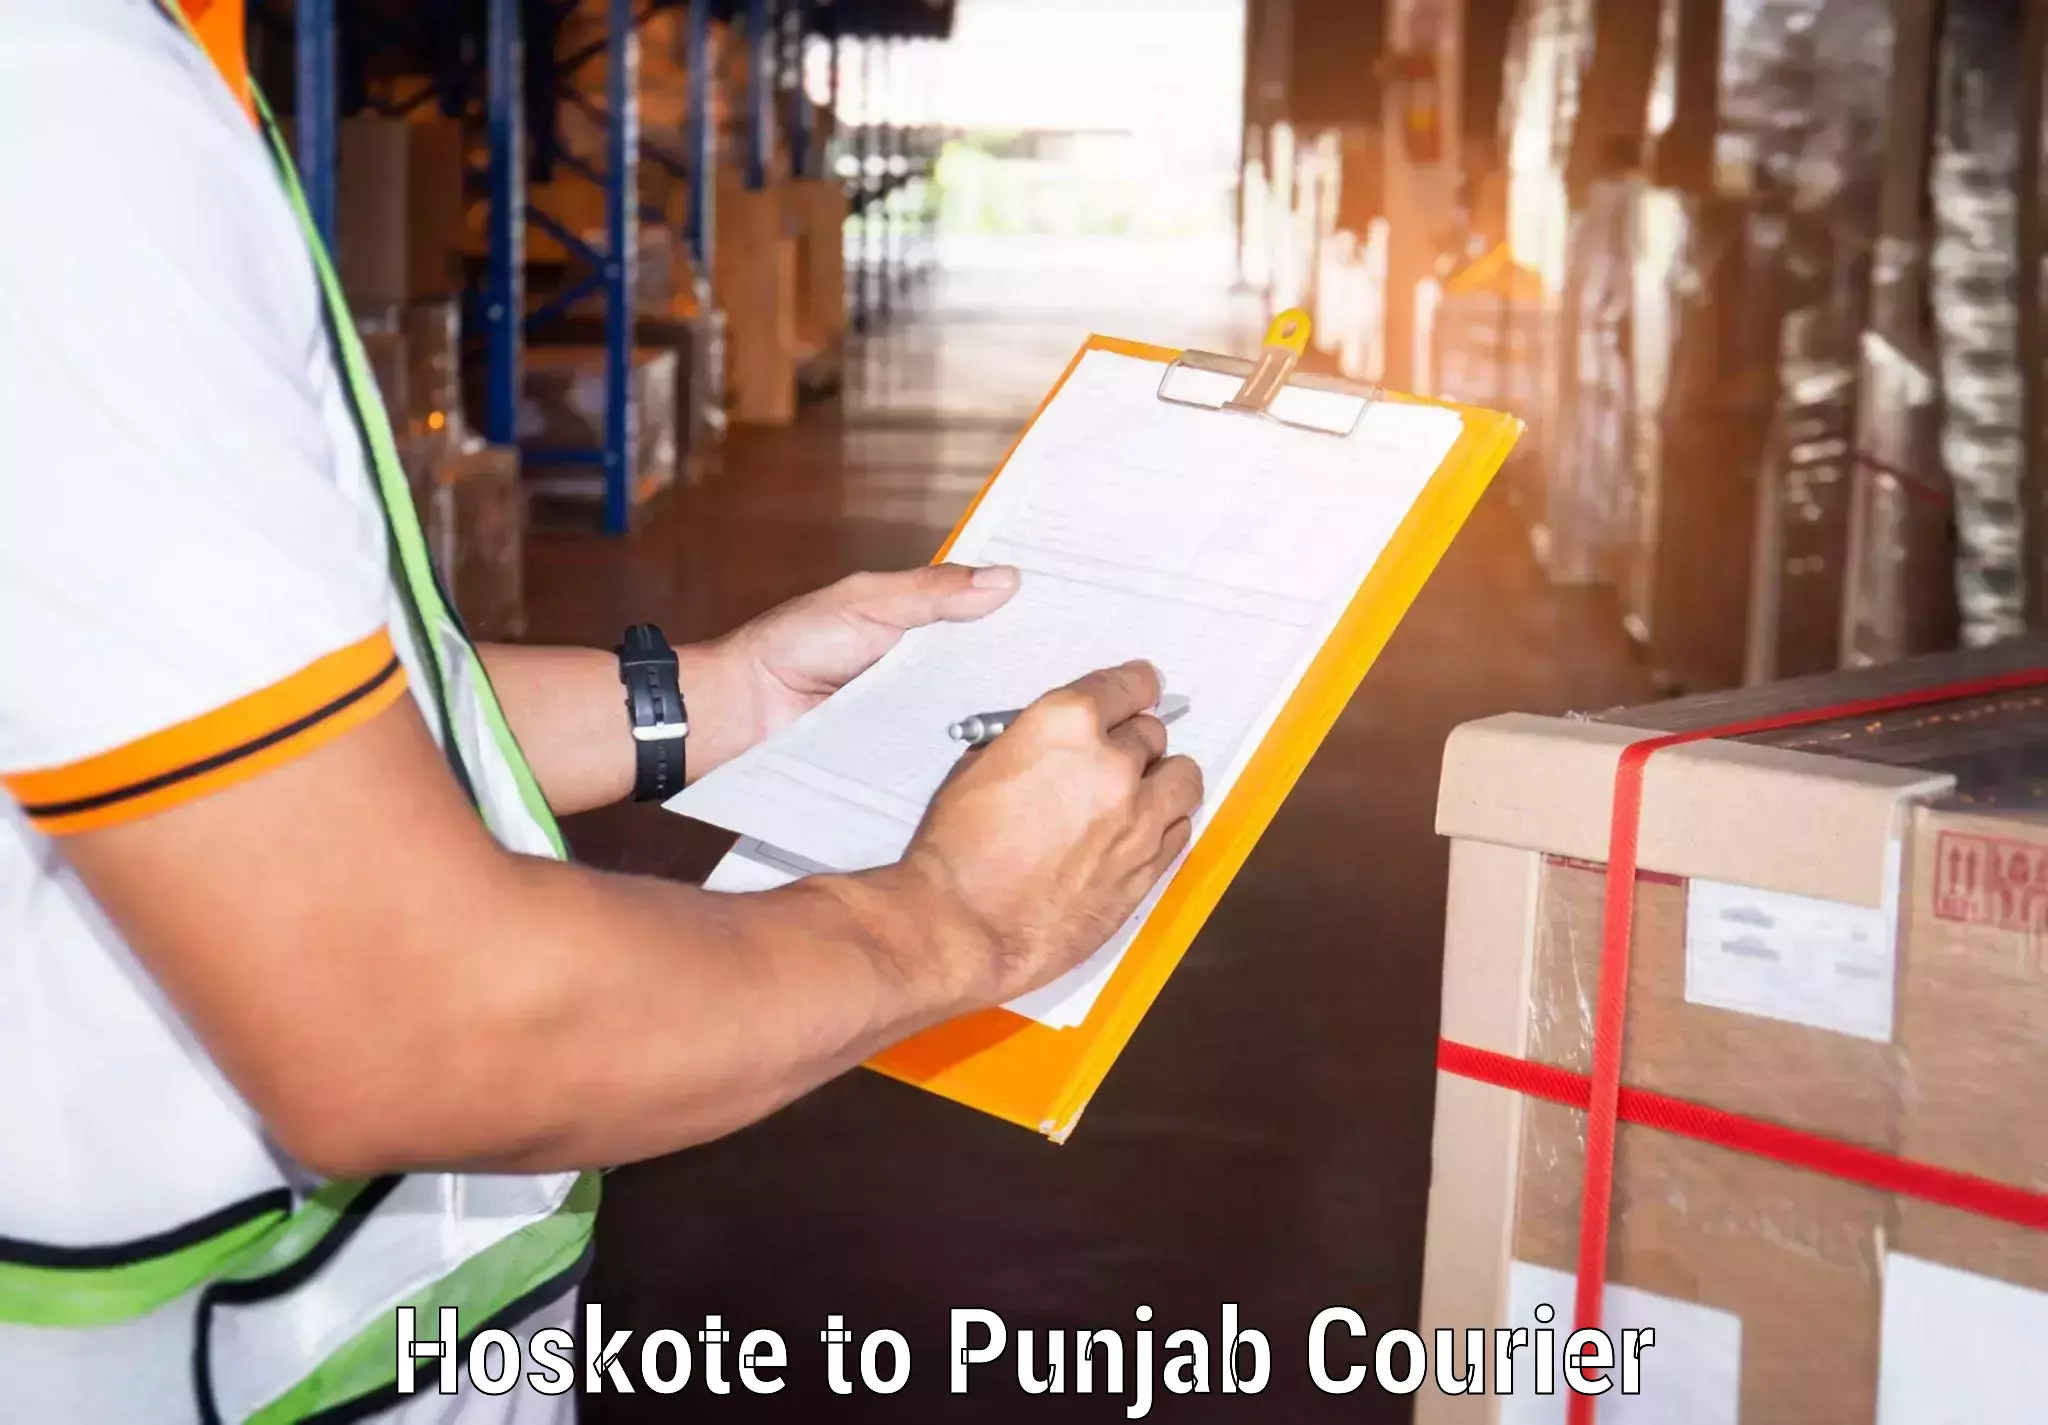 Courier service comparison Hoskote to Zirakpur